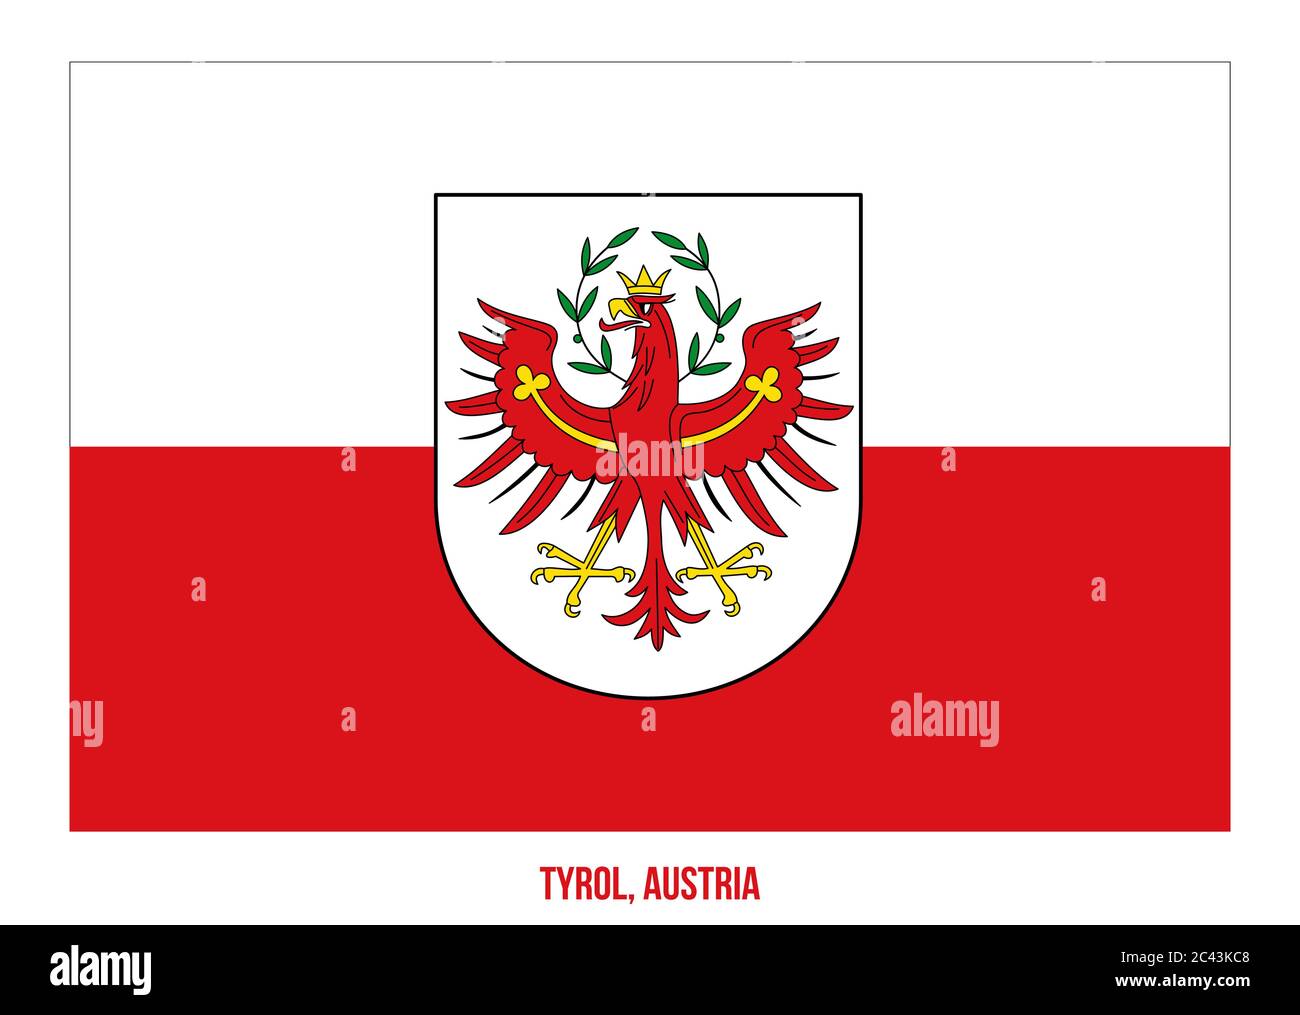 Tyrol Flag Vector Illustration on White Background. States Flag of Austria. Stock Vector